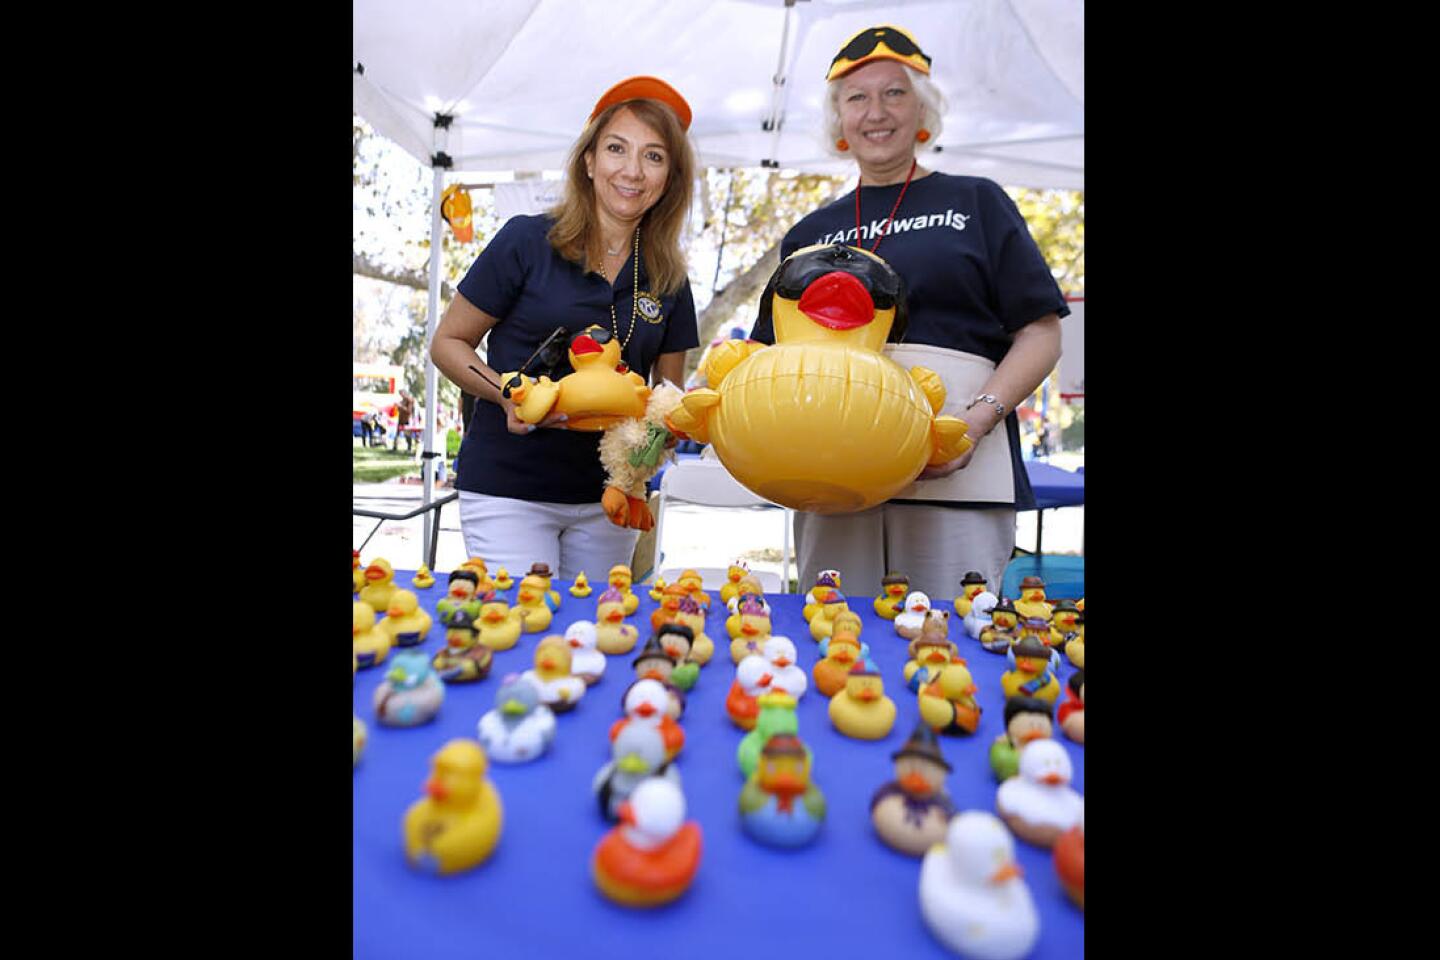 Photo Gallery: The annual Kiwanis Club of Glendale Duck Splash at Verdugo Park